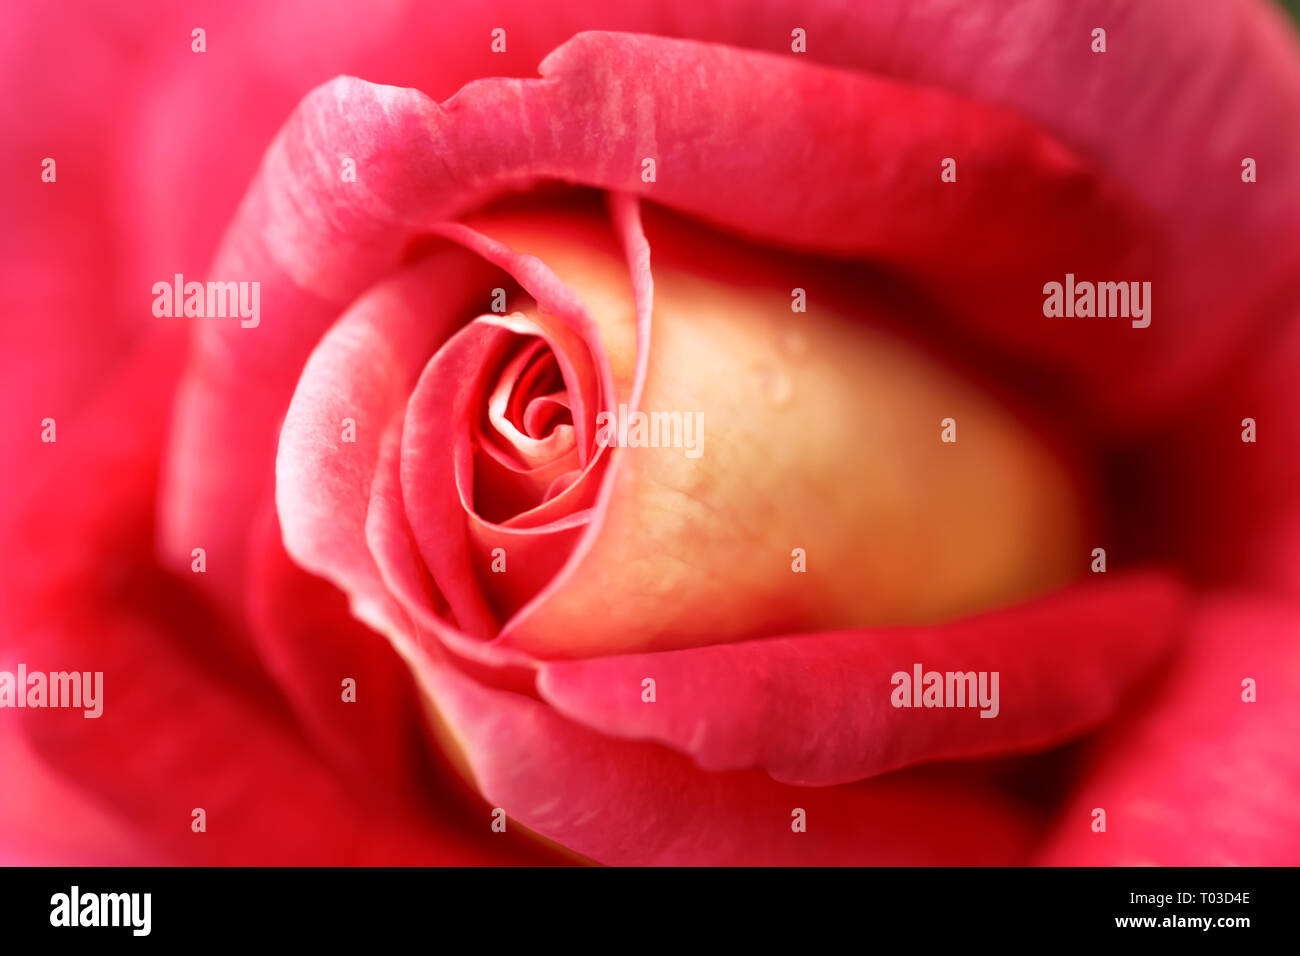 Rosas Hermosas Foto Imagen De Stock 241021326 Alamy